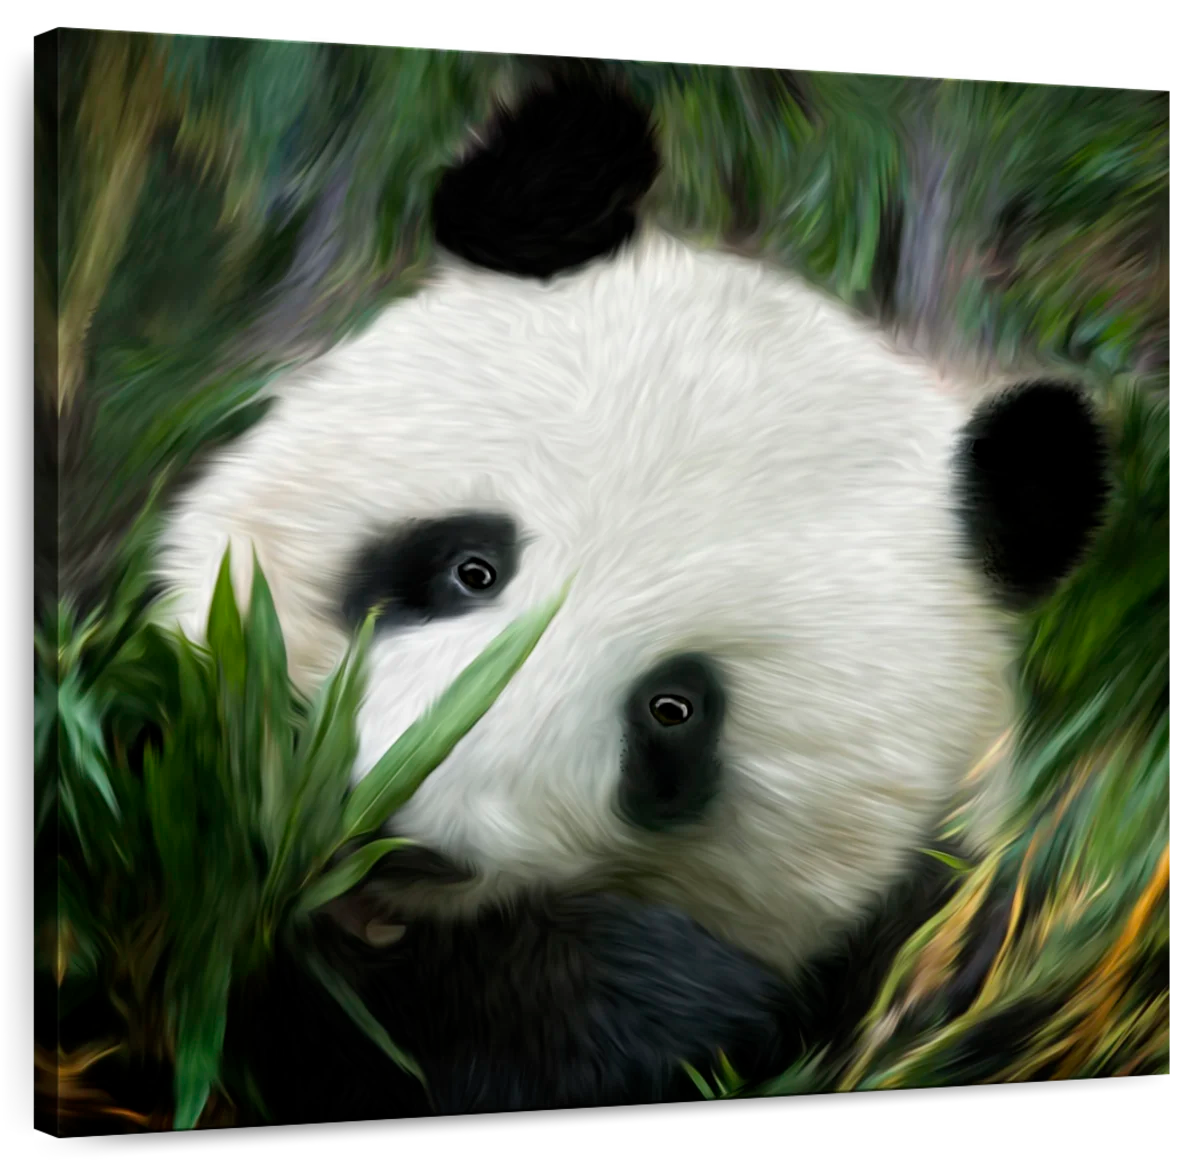 giant panda face